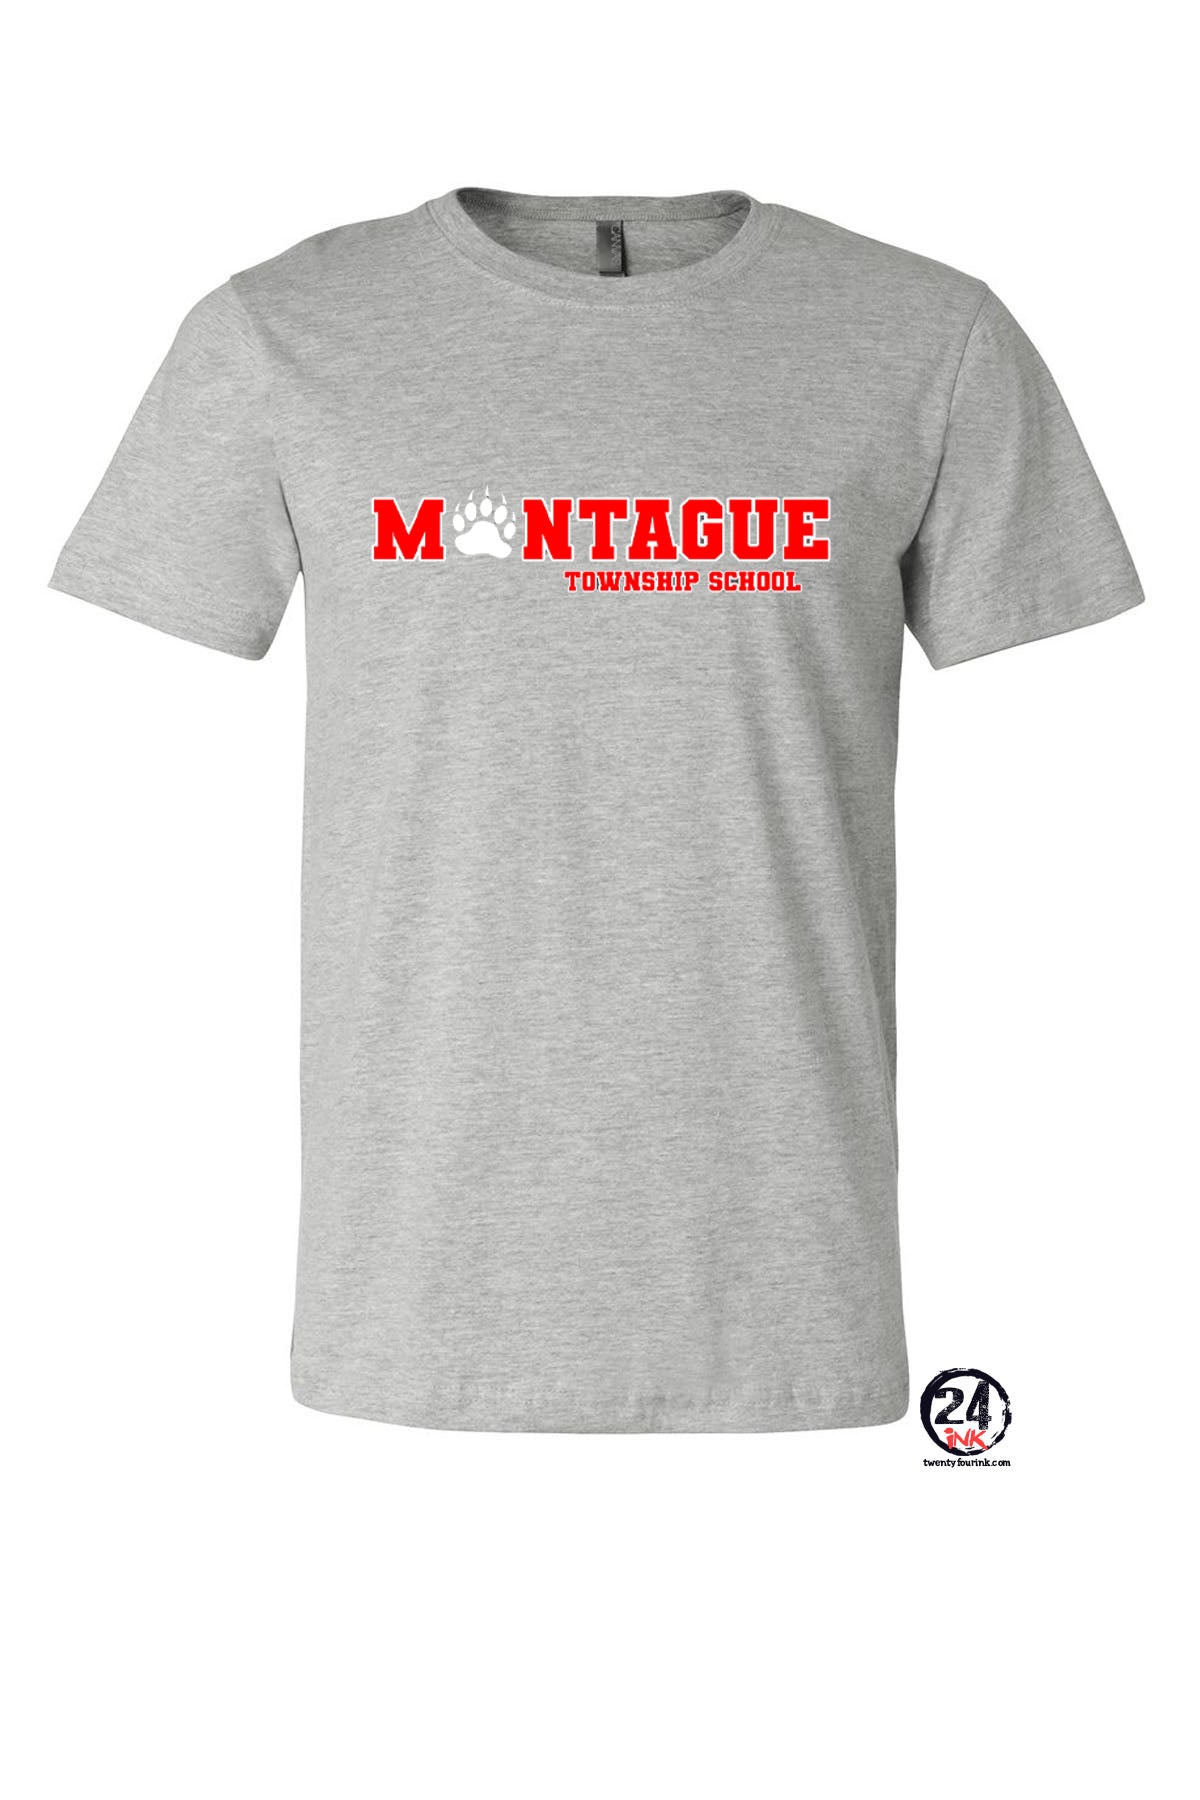 Montague design 4 T-Shirt